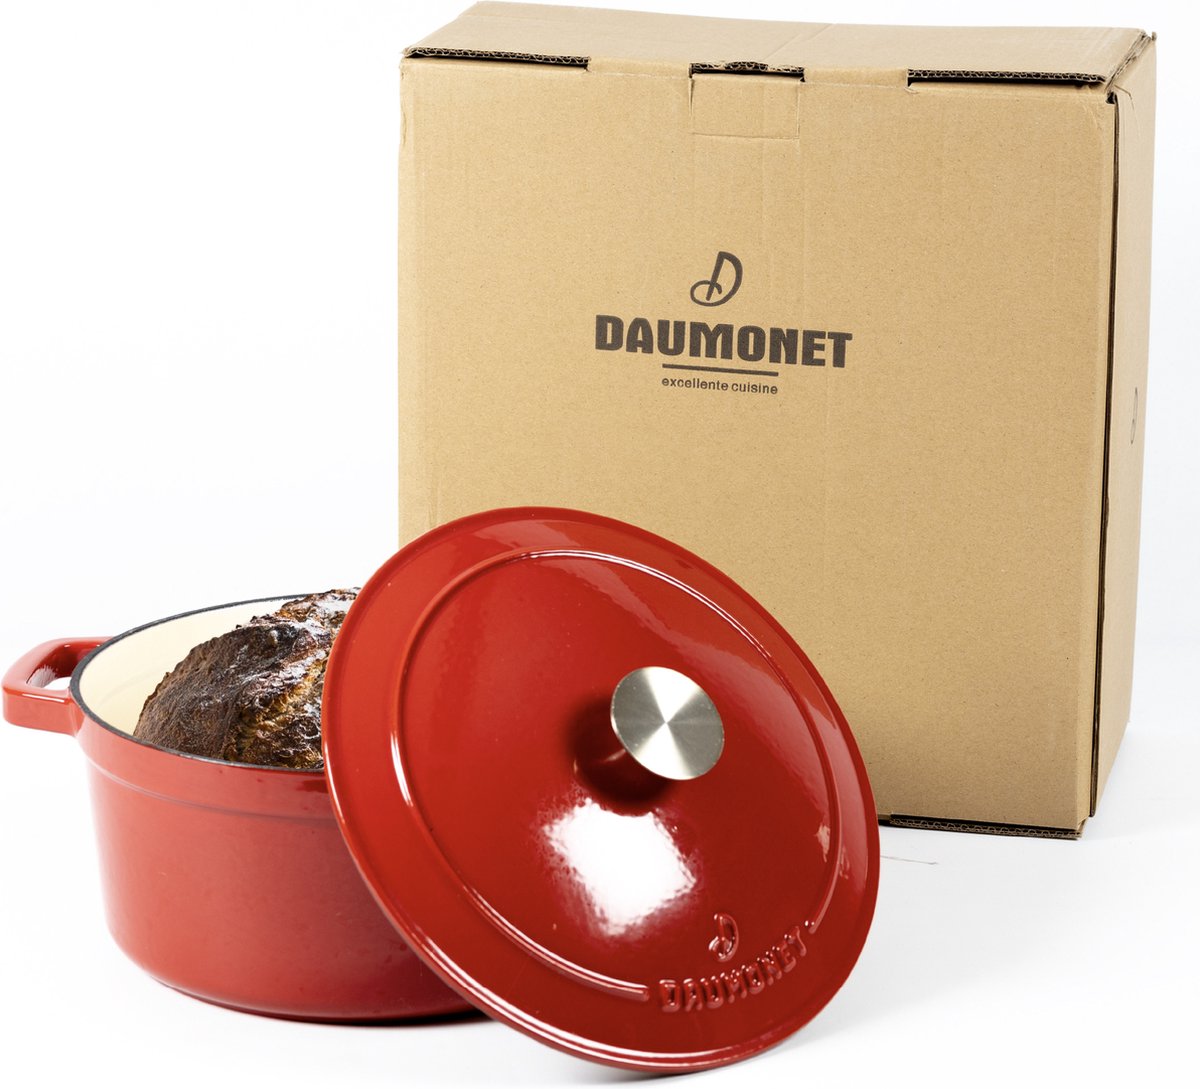 Daumonet carême rouge cast iron frying pan - Ø26 cm - 4.4 liters